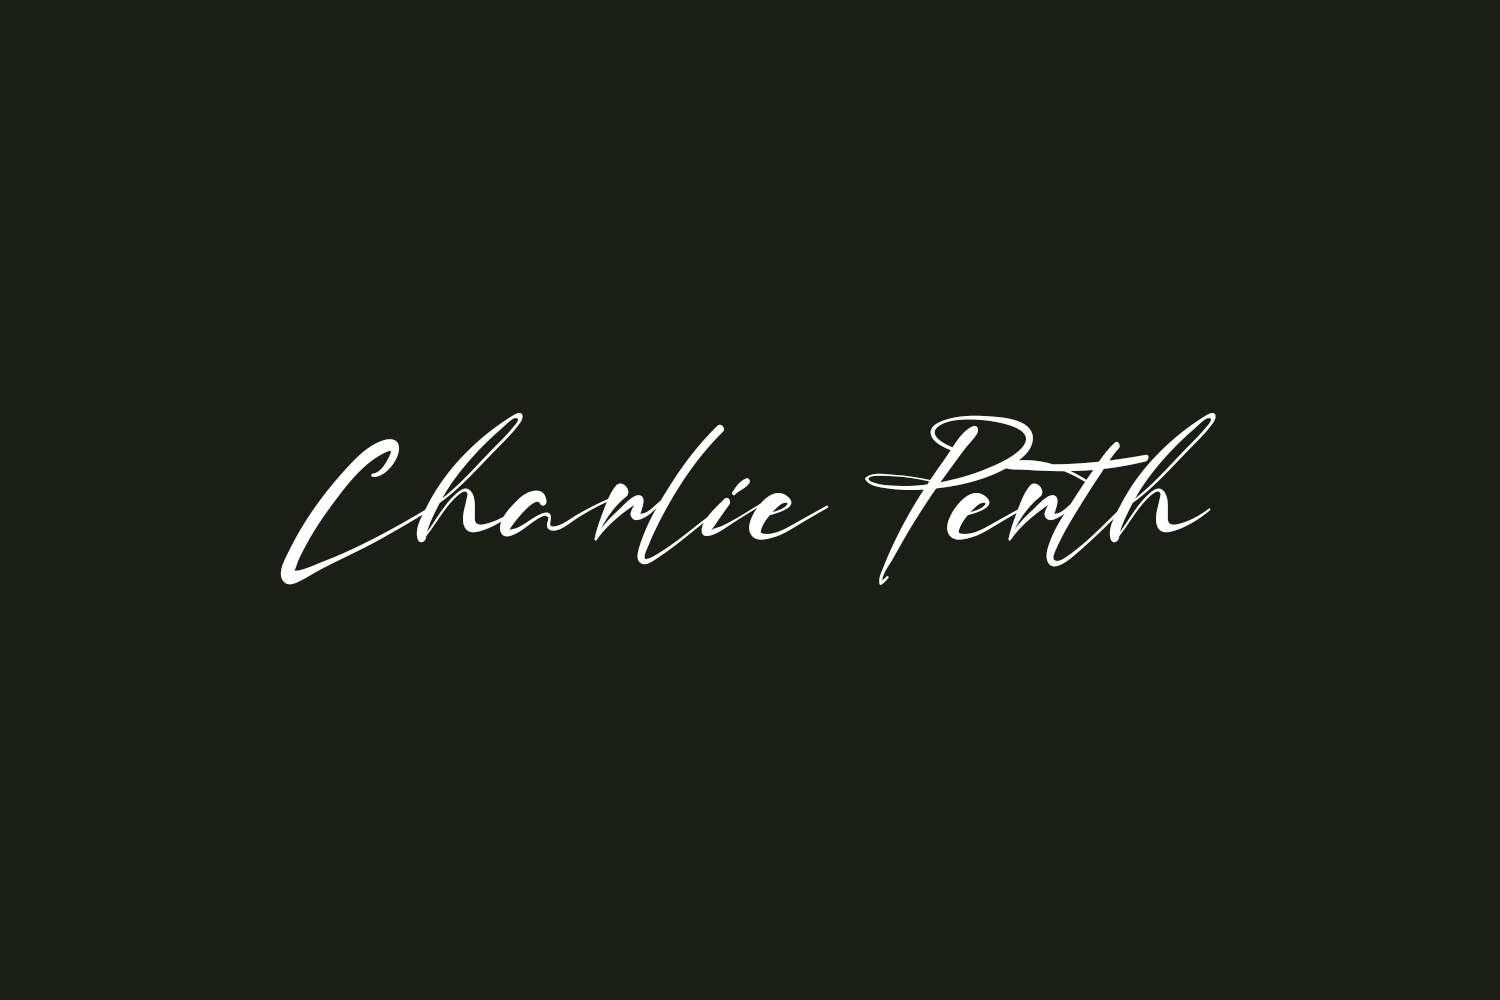 Charlie Perth Free Font